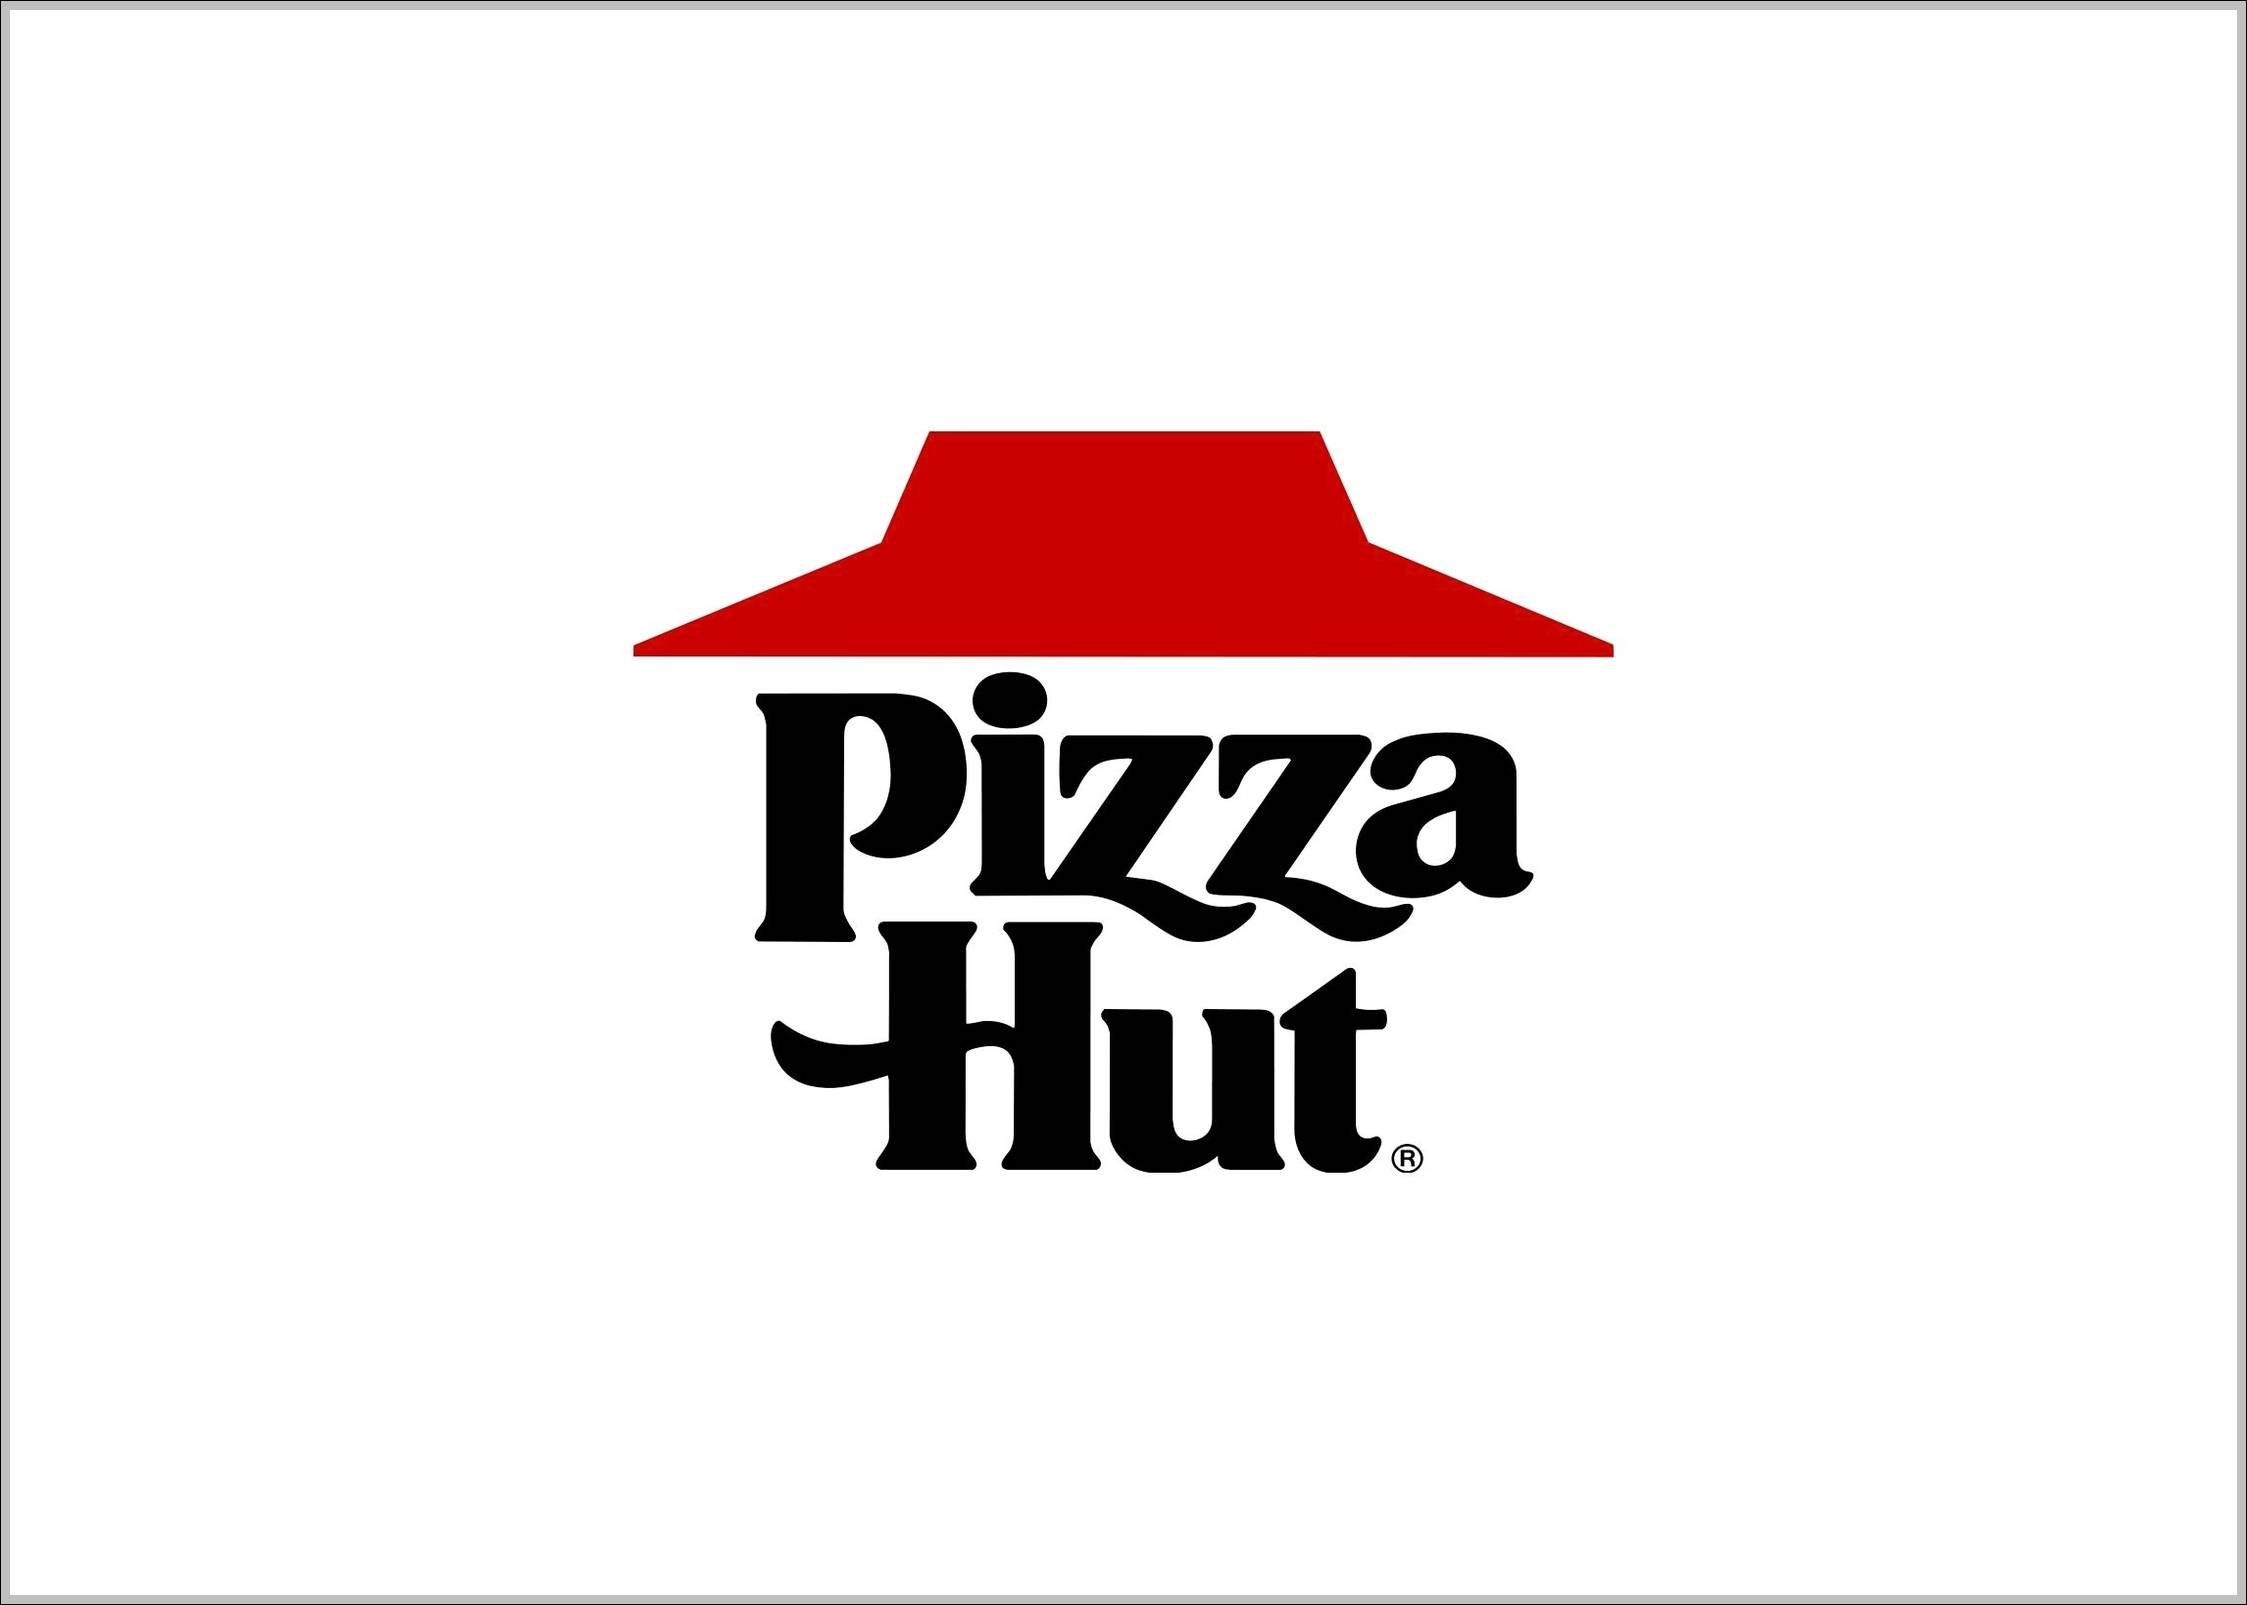 PizzaHut logo 1967